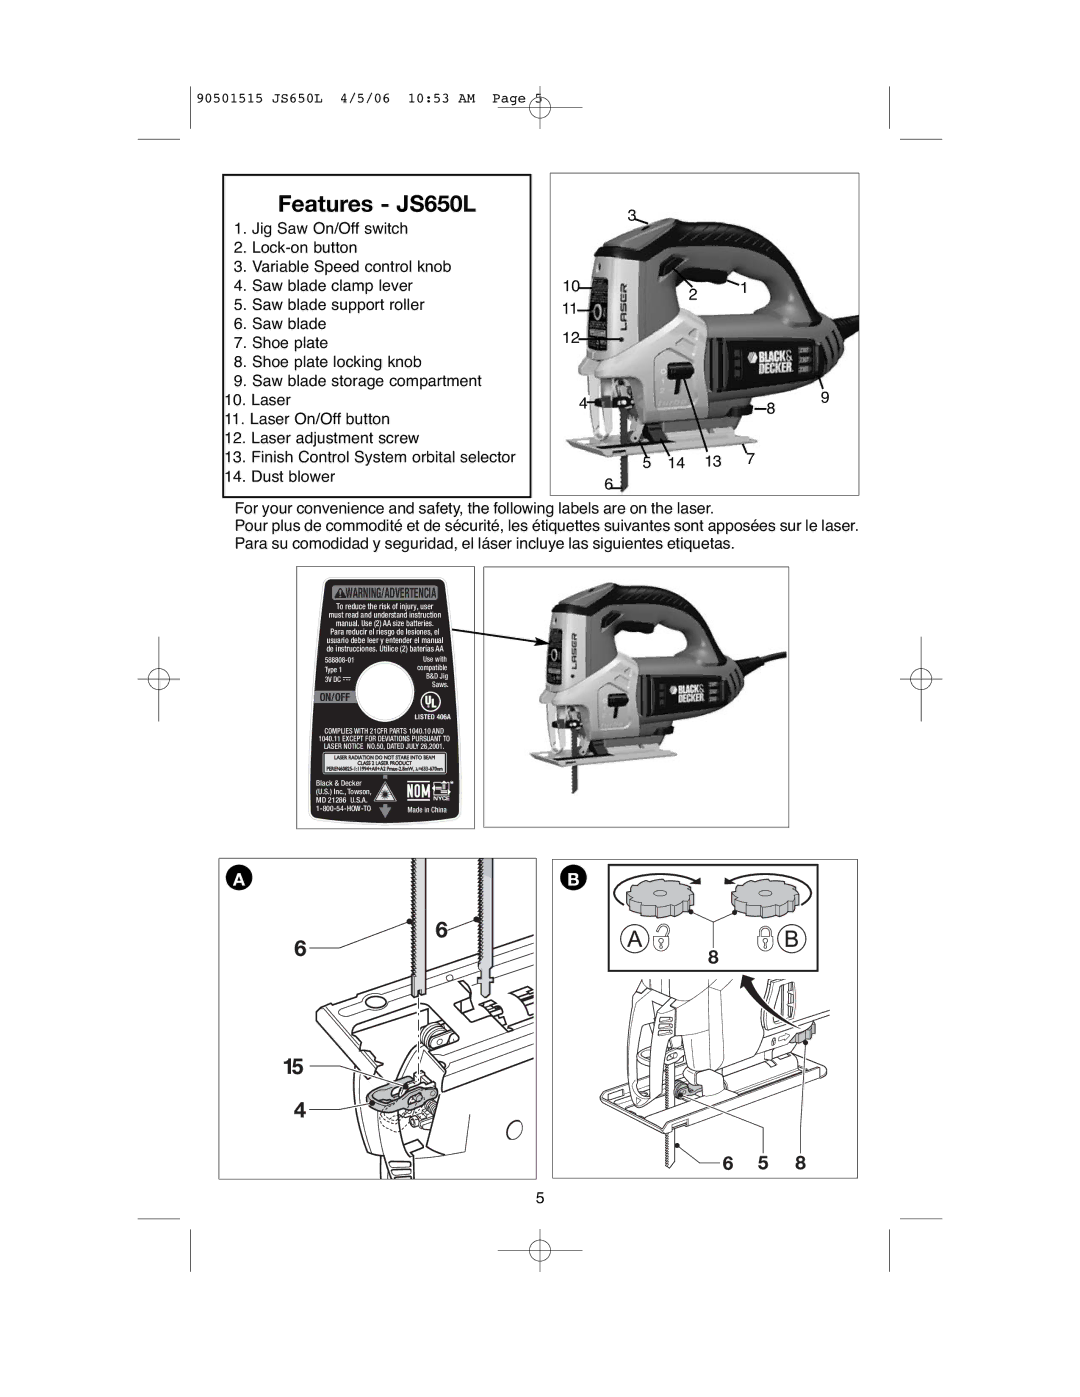 Black & Decker instruction manual Features JS650L, On/Off 